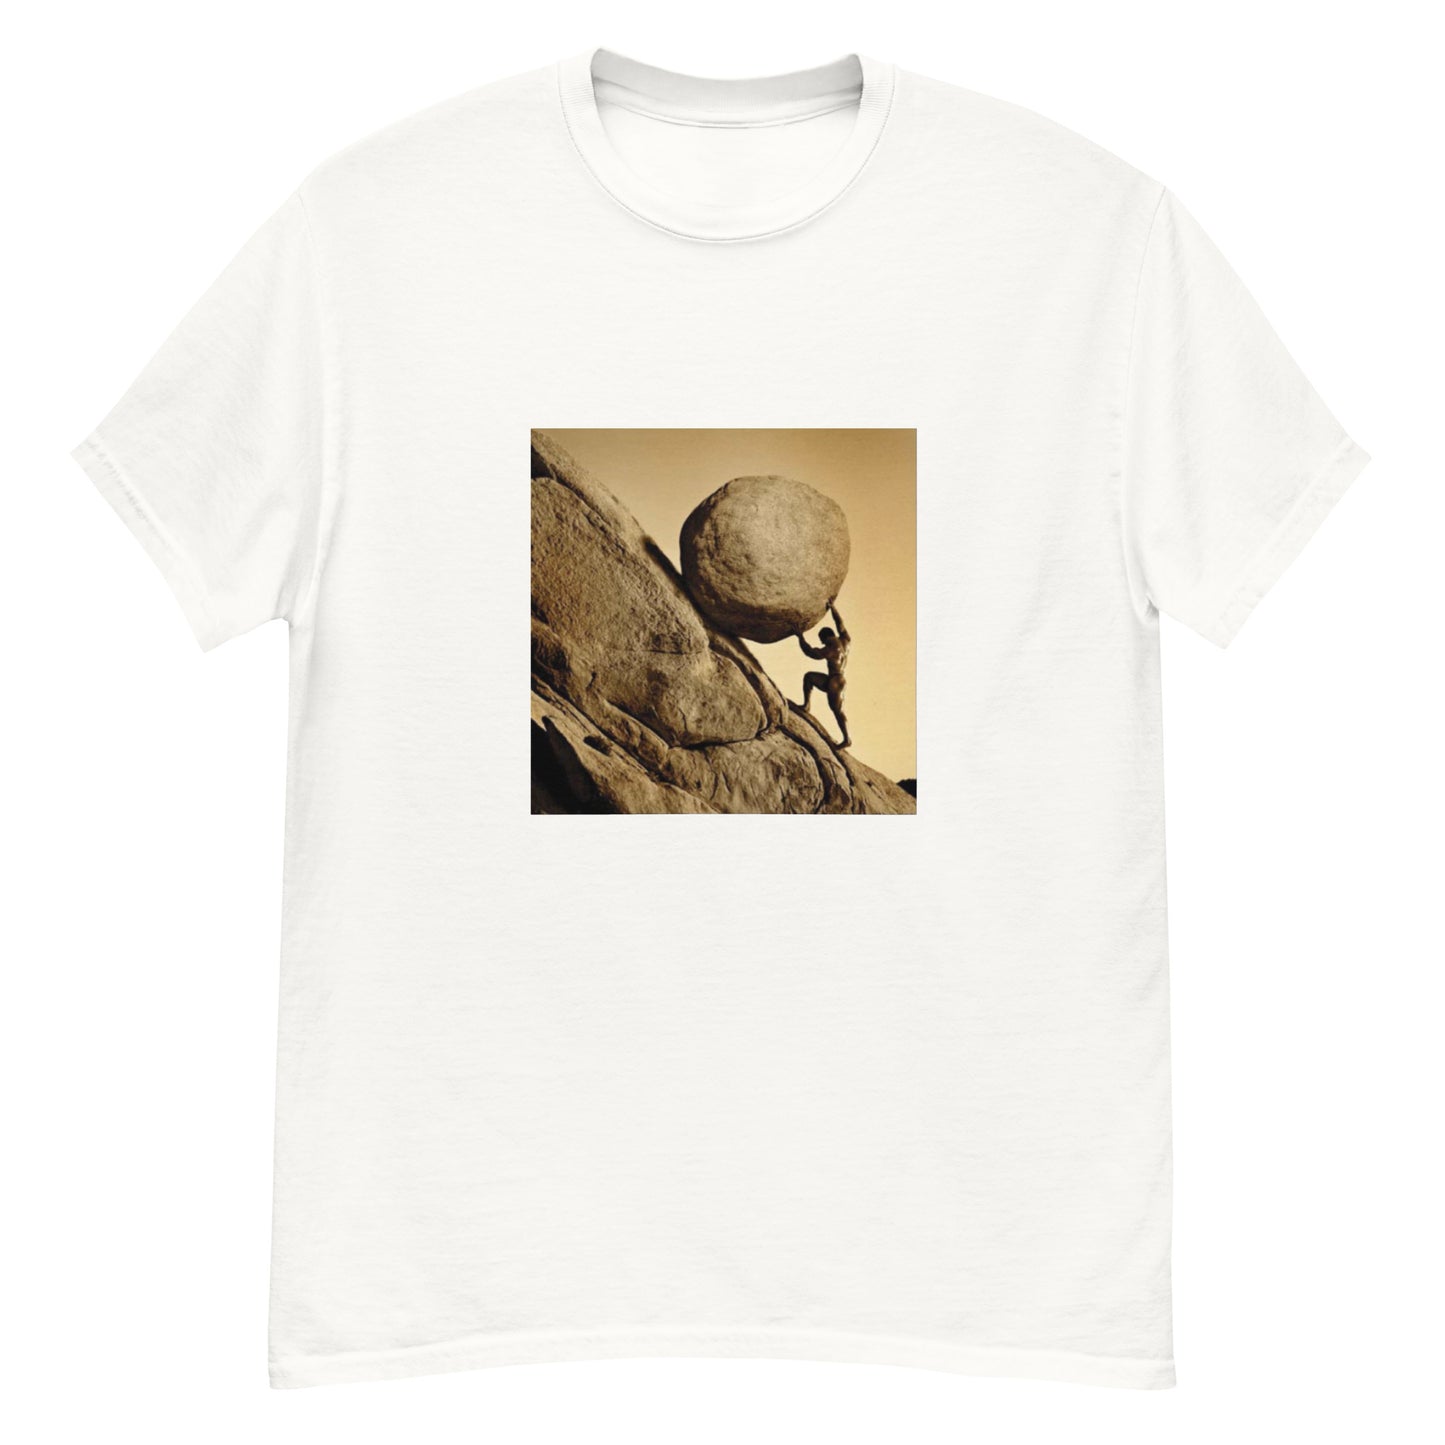 Sisyphus Shirt